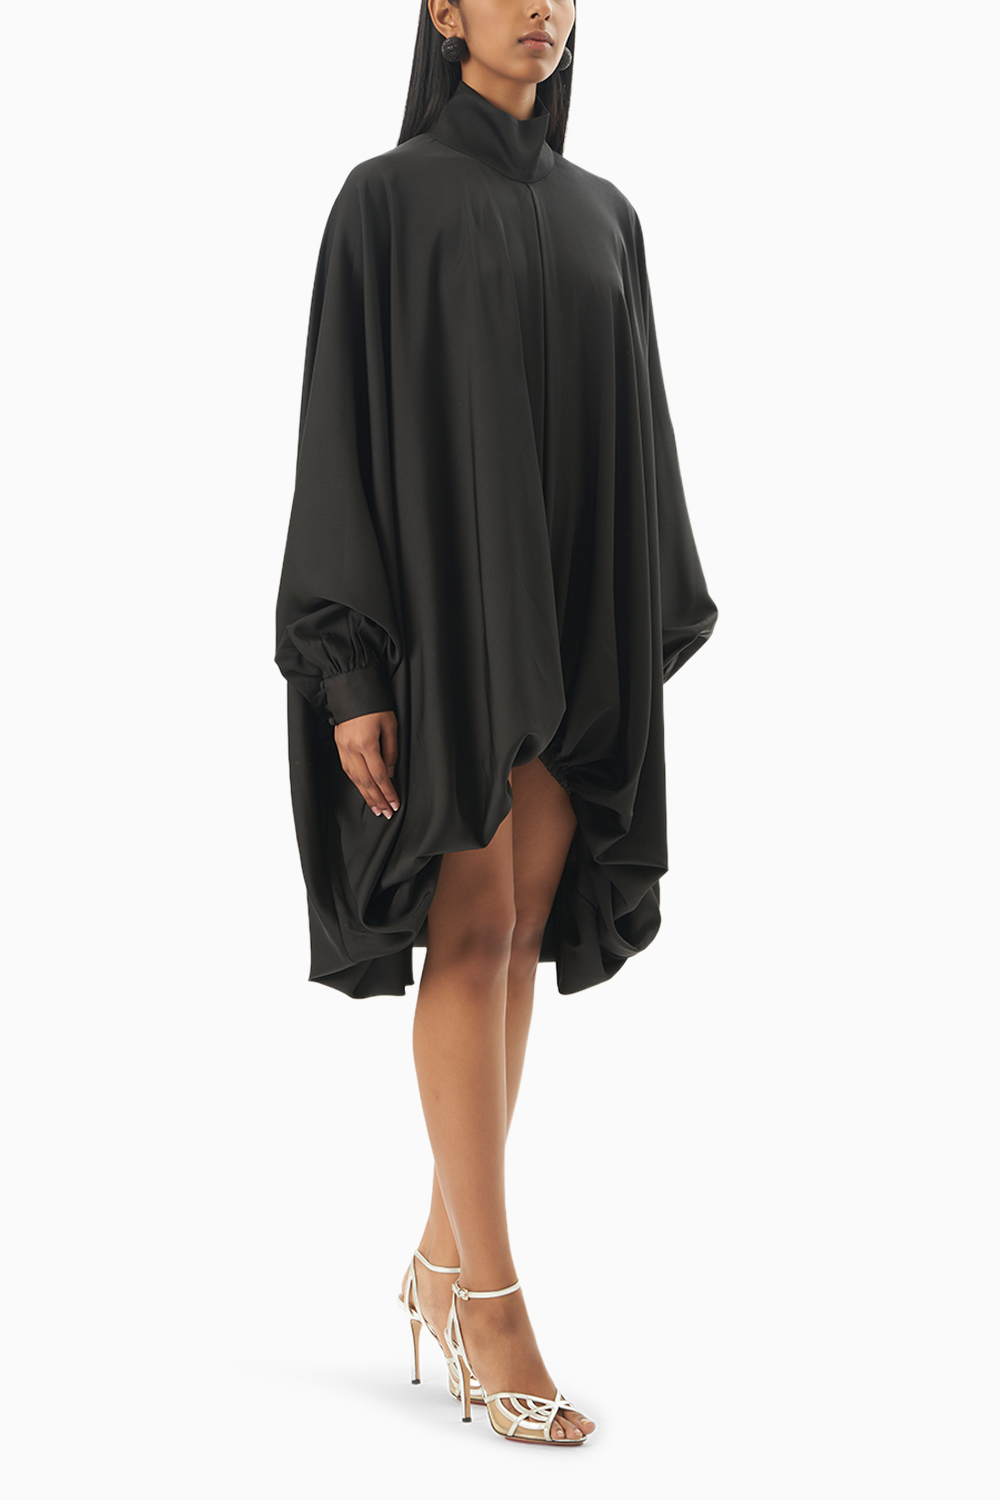 Black Modish Neckline Dress